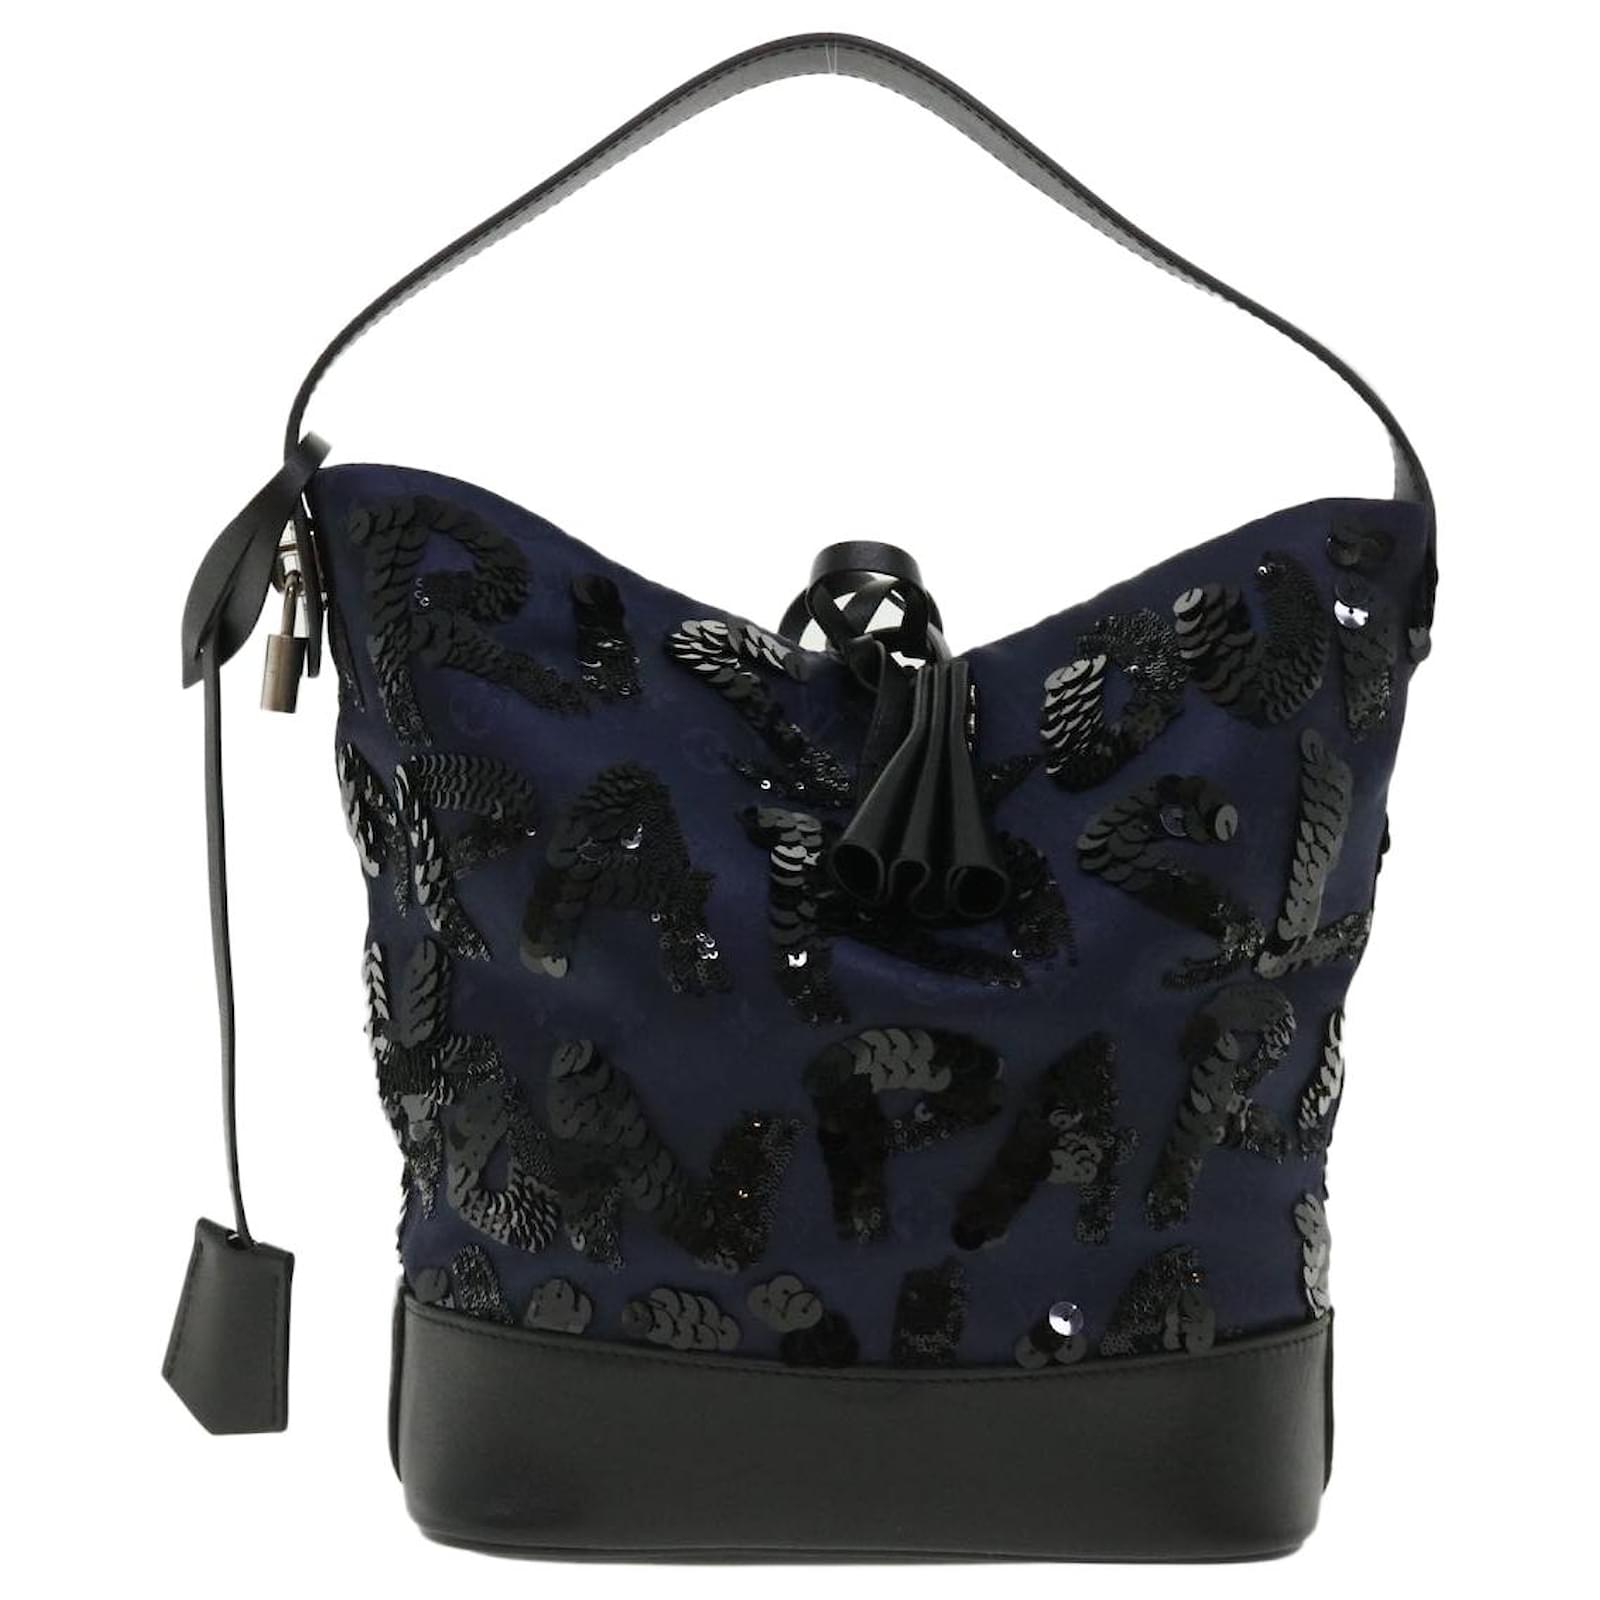 LOUIS VUITTON Louis Vuitton Ange MM handbag M92101 monogram satin black  silver metal fittings purse